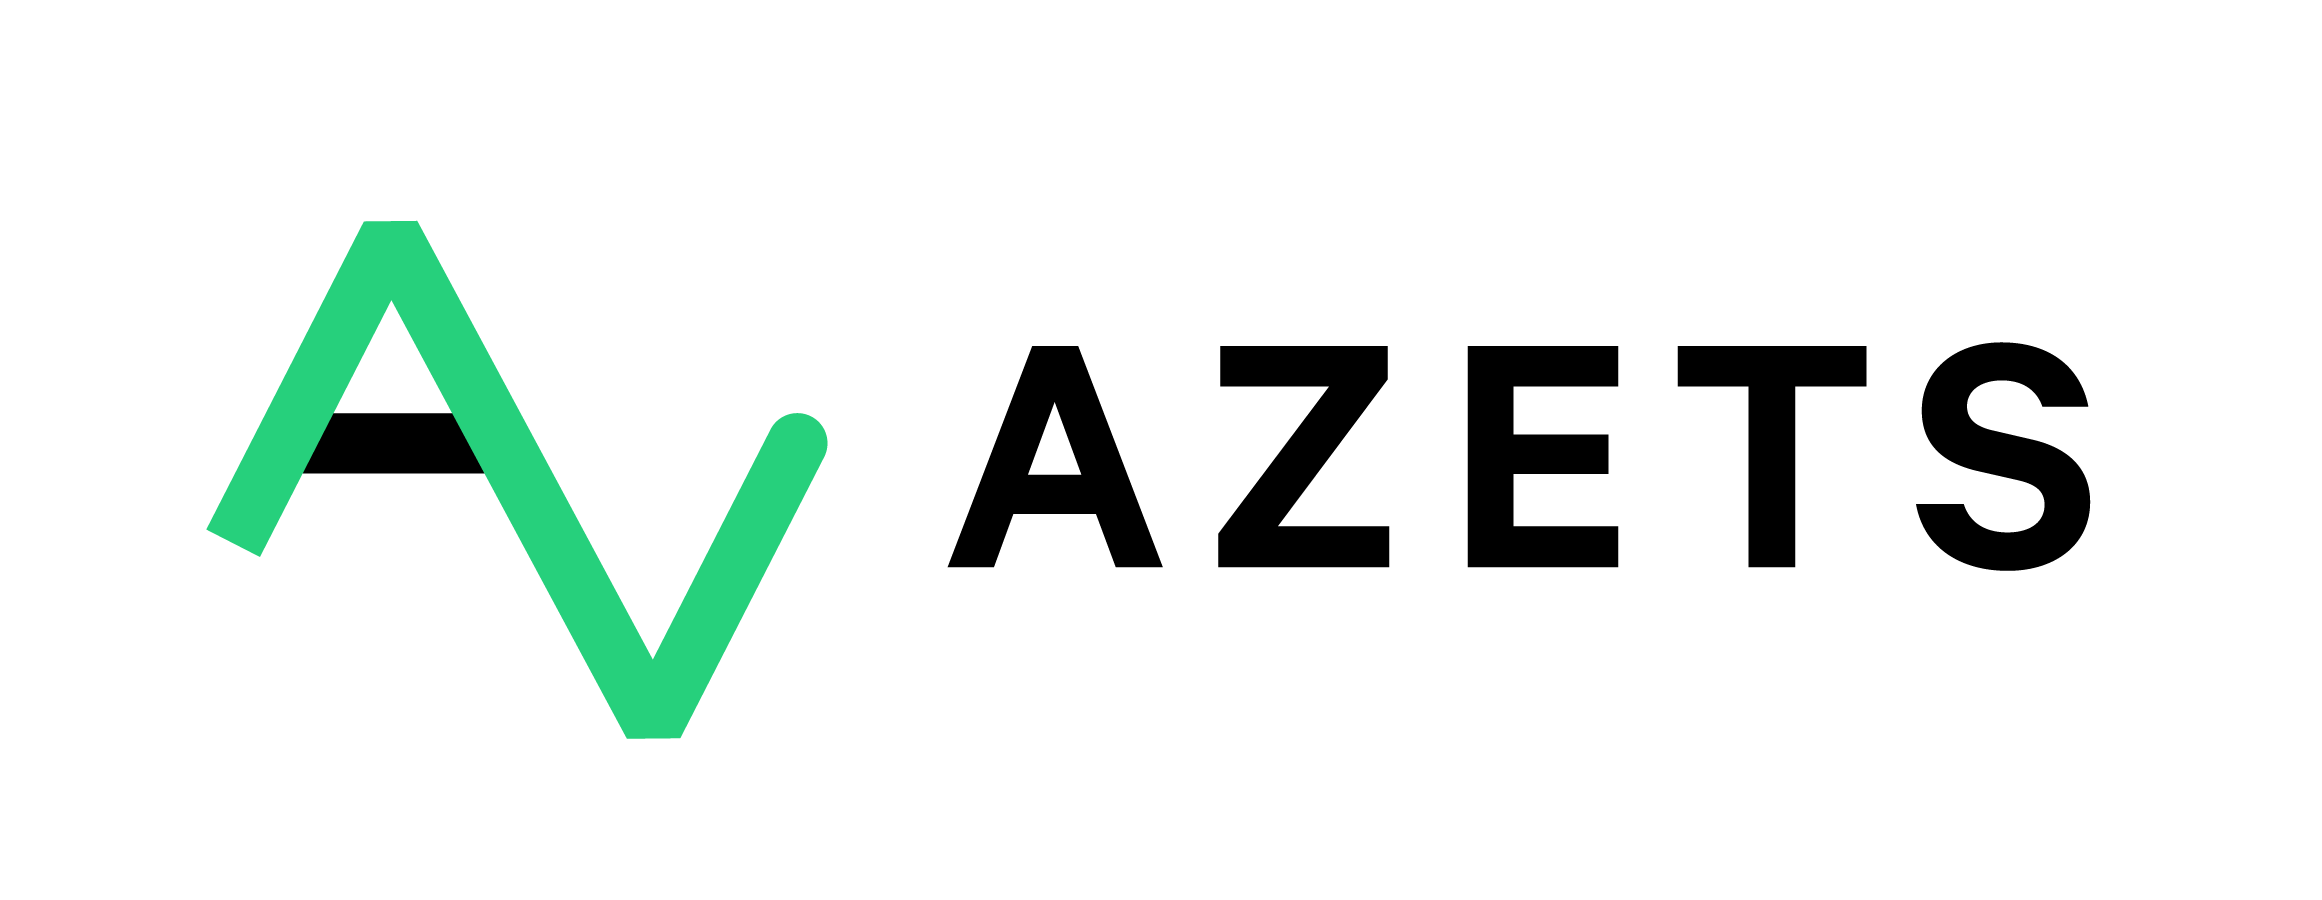 Azets-logo-1-RGB-v1.png